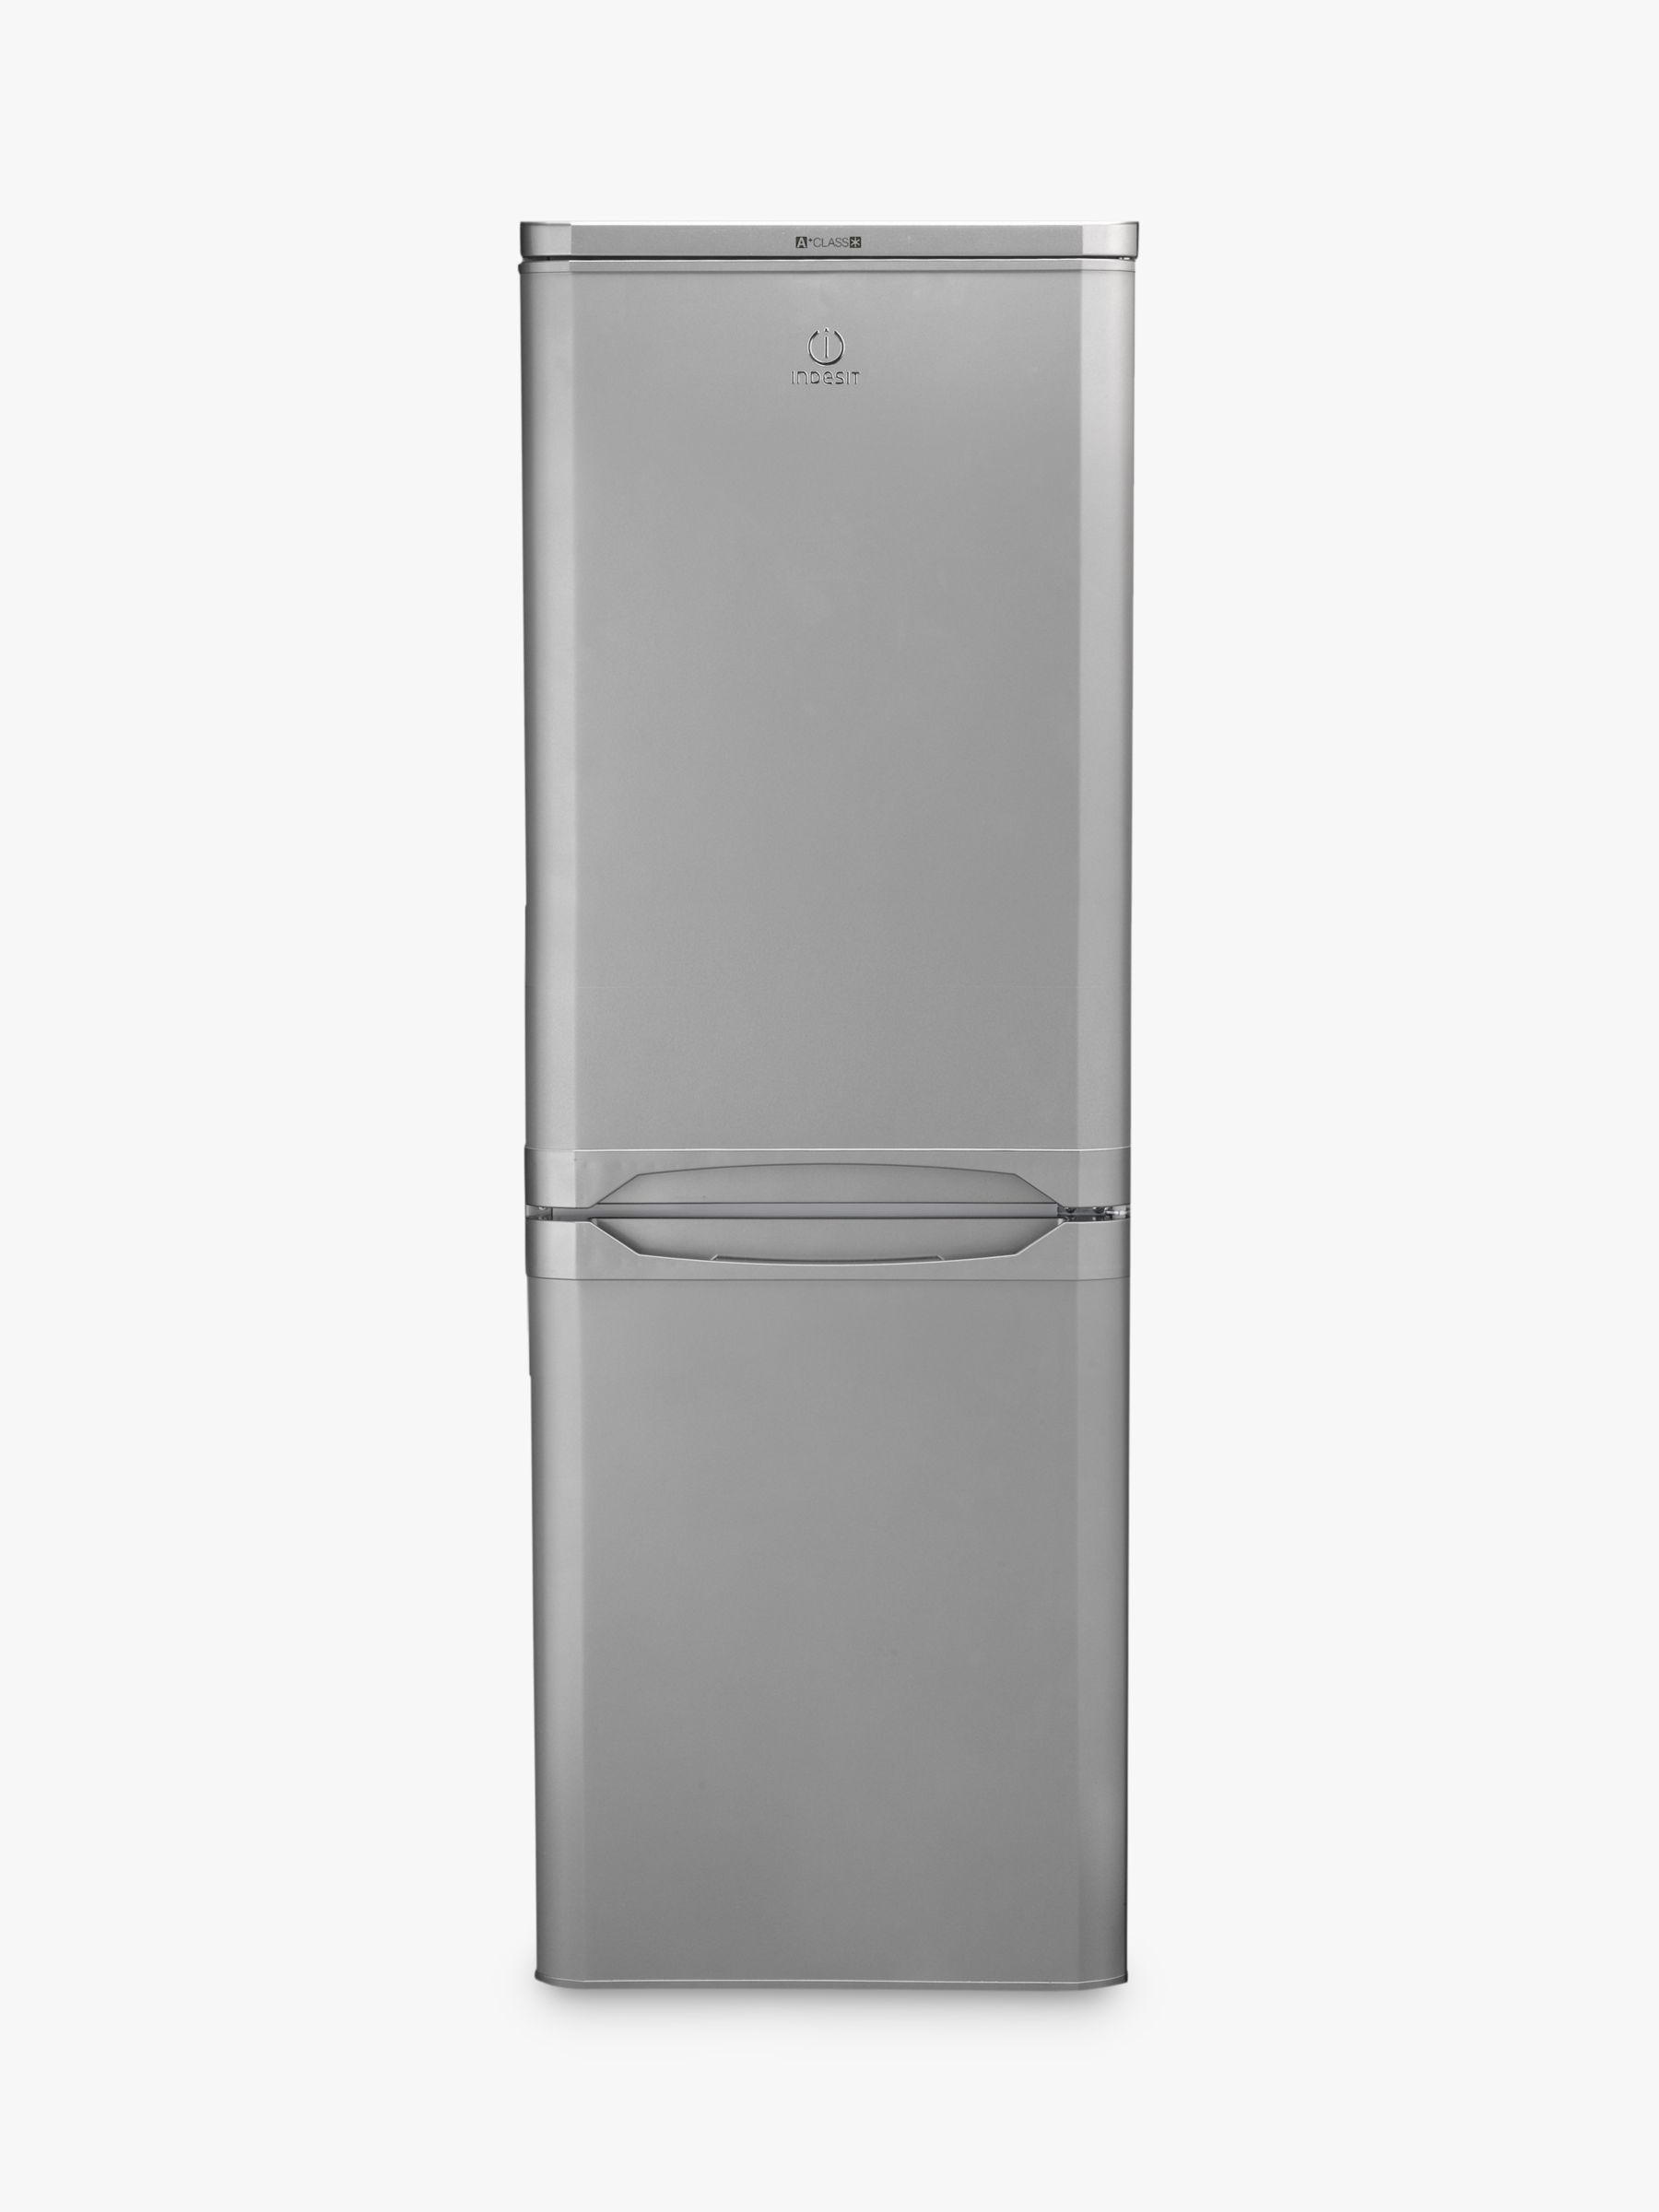 Indesit IBD5515SUK Freestanding Fridge Freezer, A+ Energy Rating, 55cm Wide, Silver